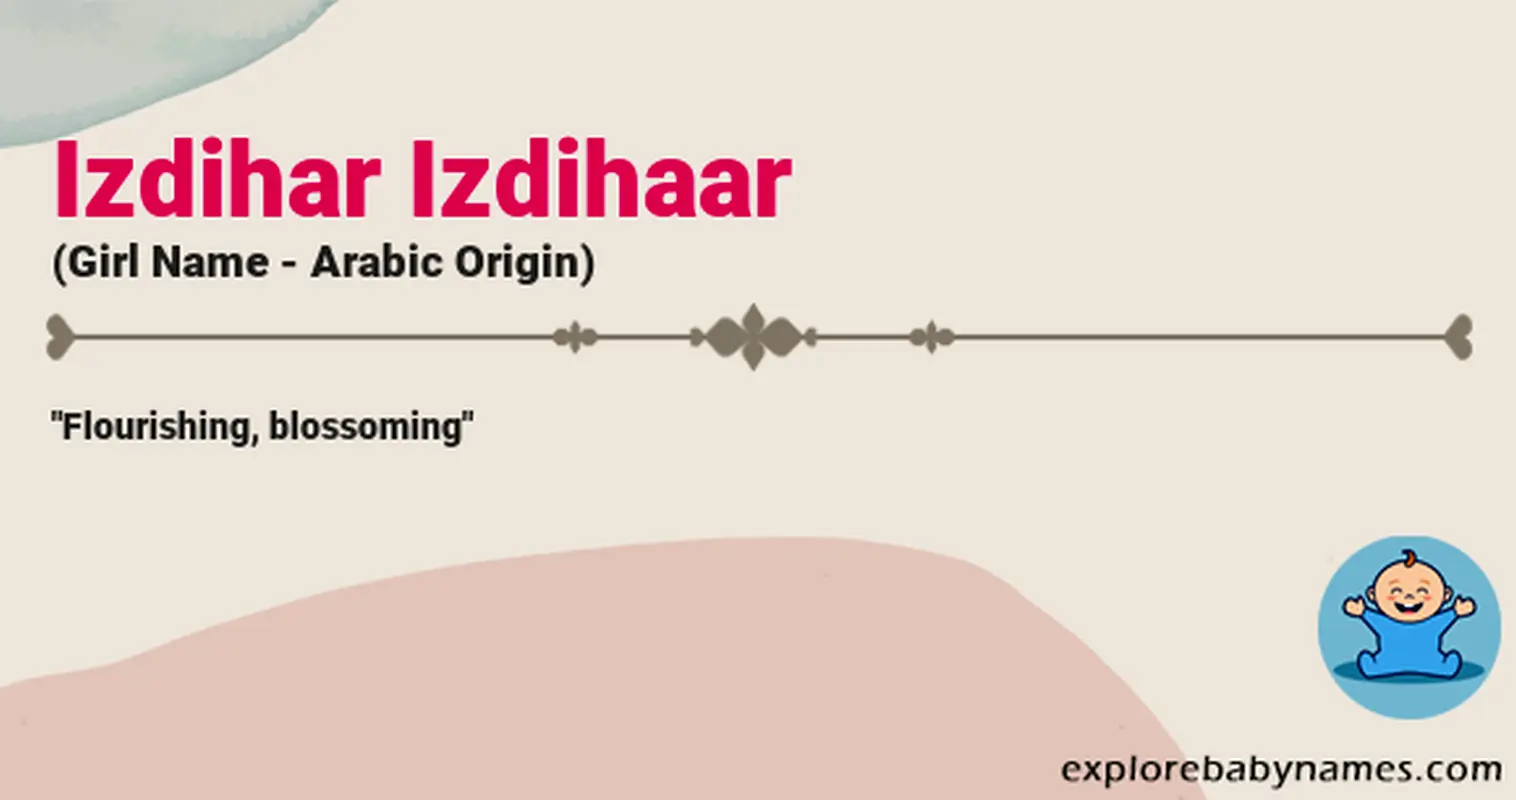 Meaning of Izdihar Izdihaar